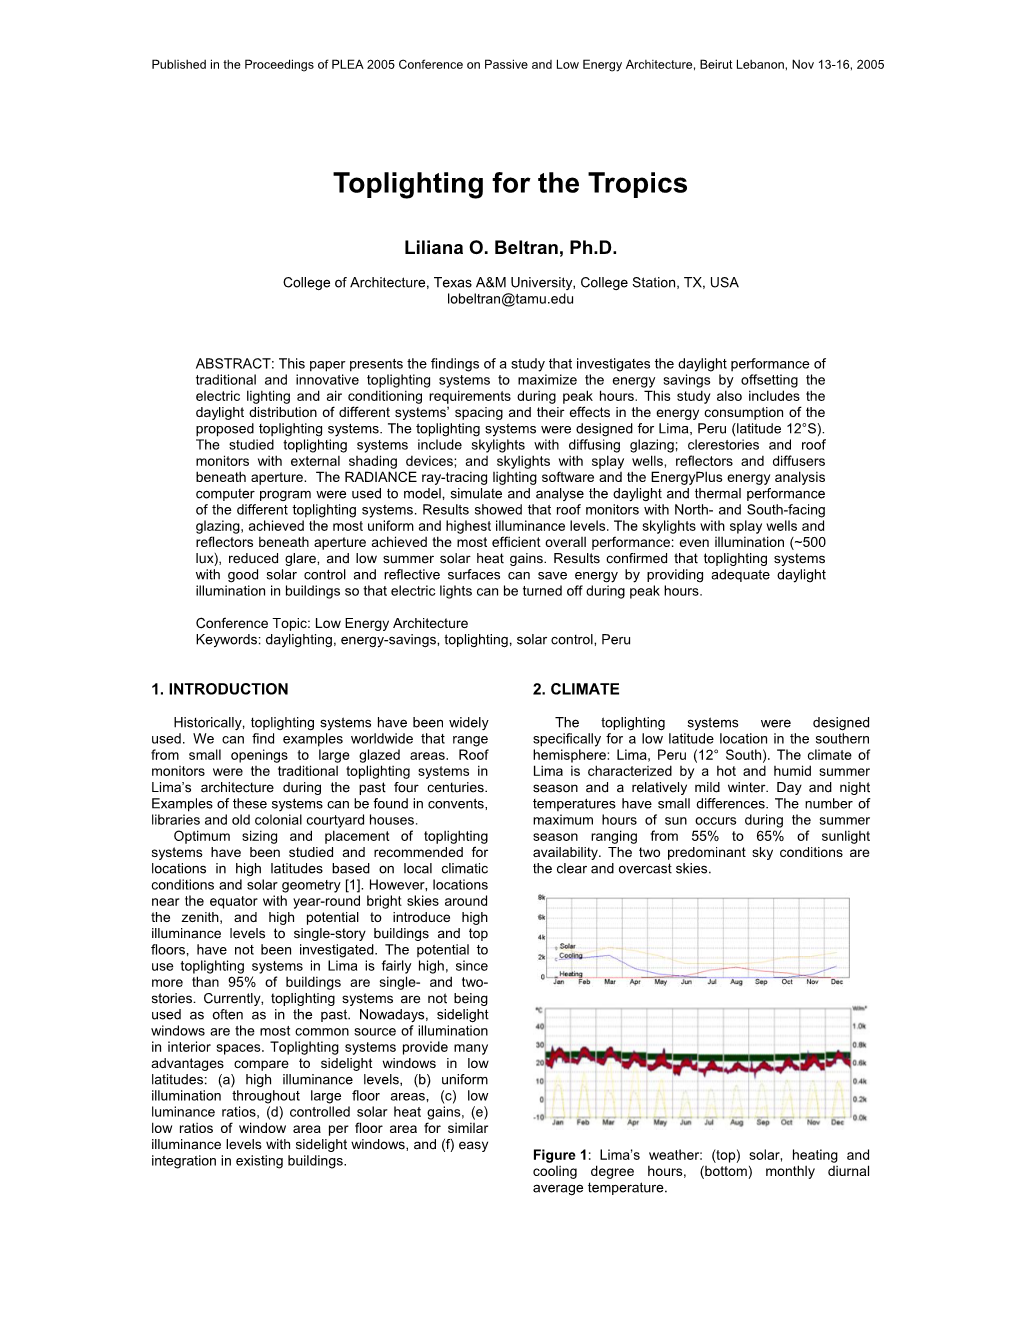 Toplighting for the Tropics